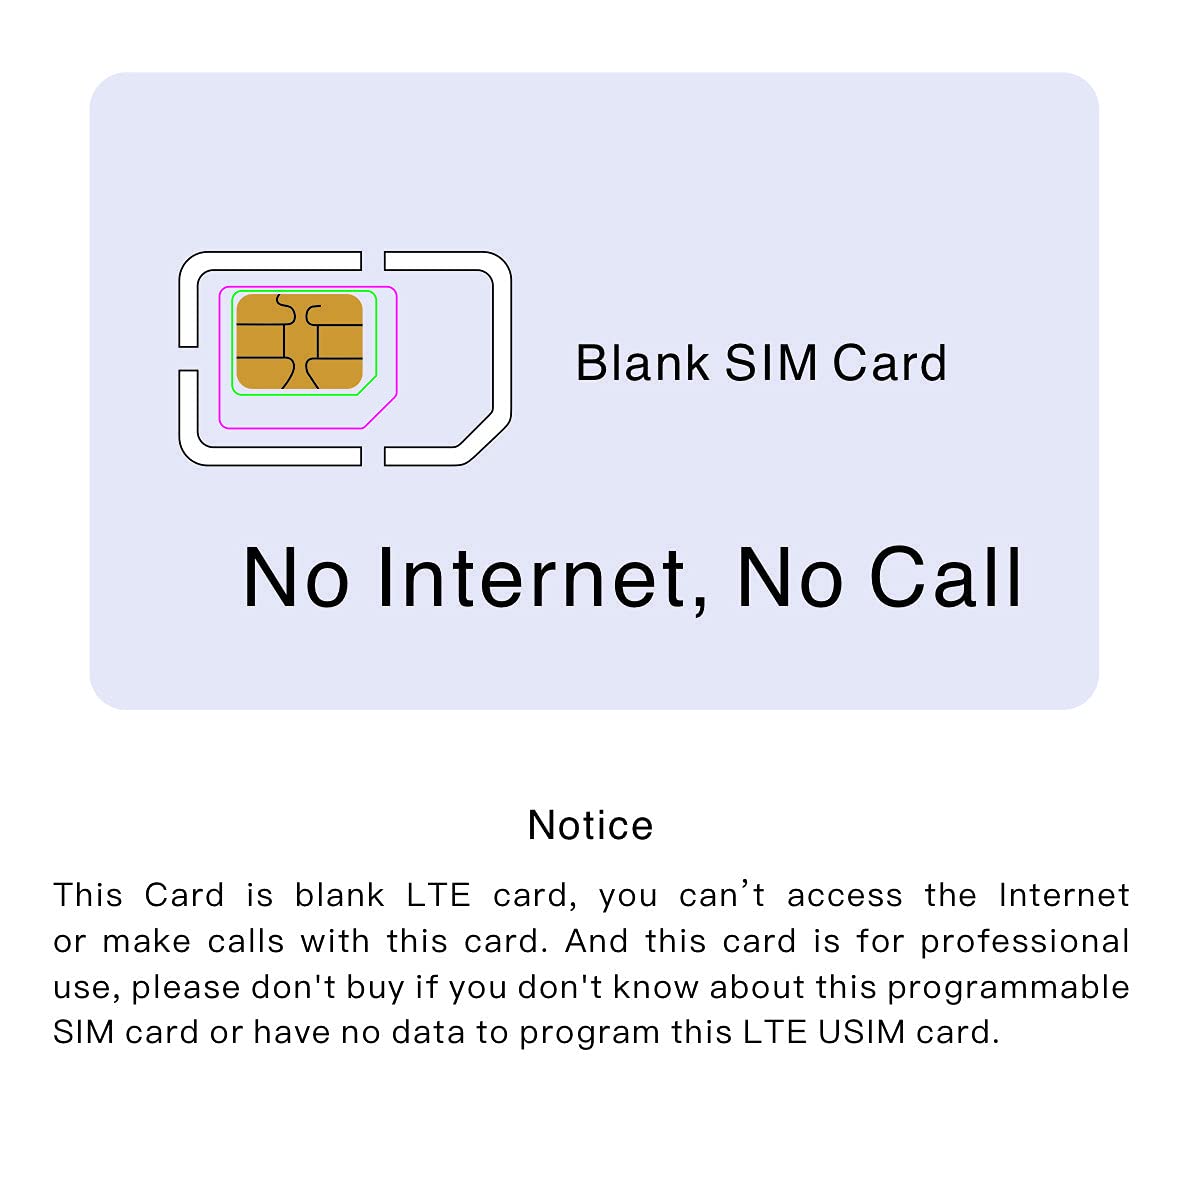 Gialer SIM Card Program kit, SIM Card Tools & Accessories 1 Card Reader + 5pcs USIM Cards + 3 in 1 Adapter kit + Newest GRSIMWrite software